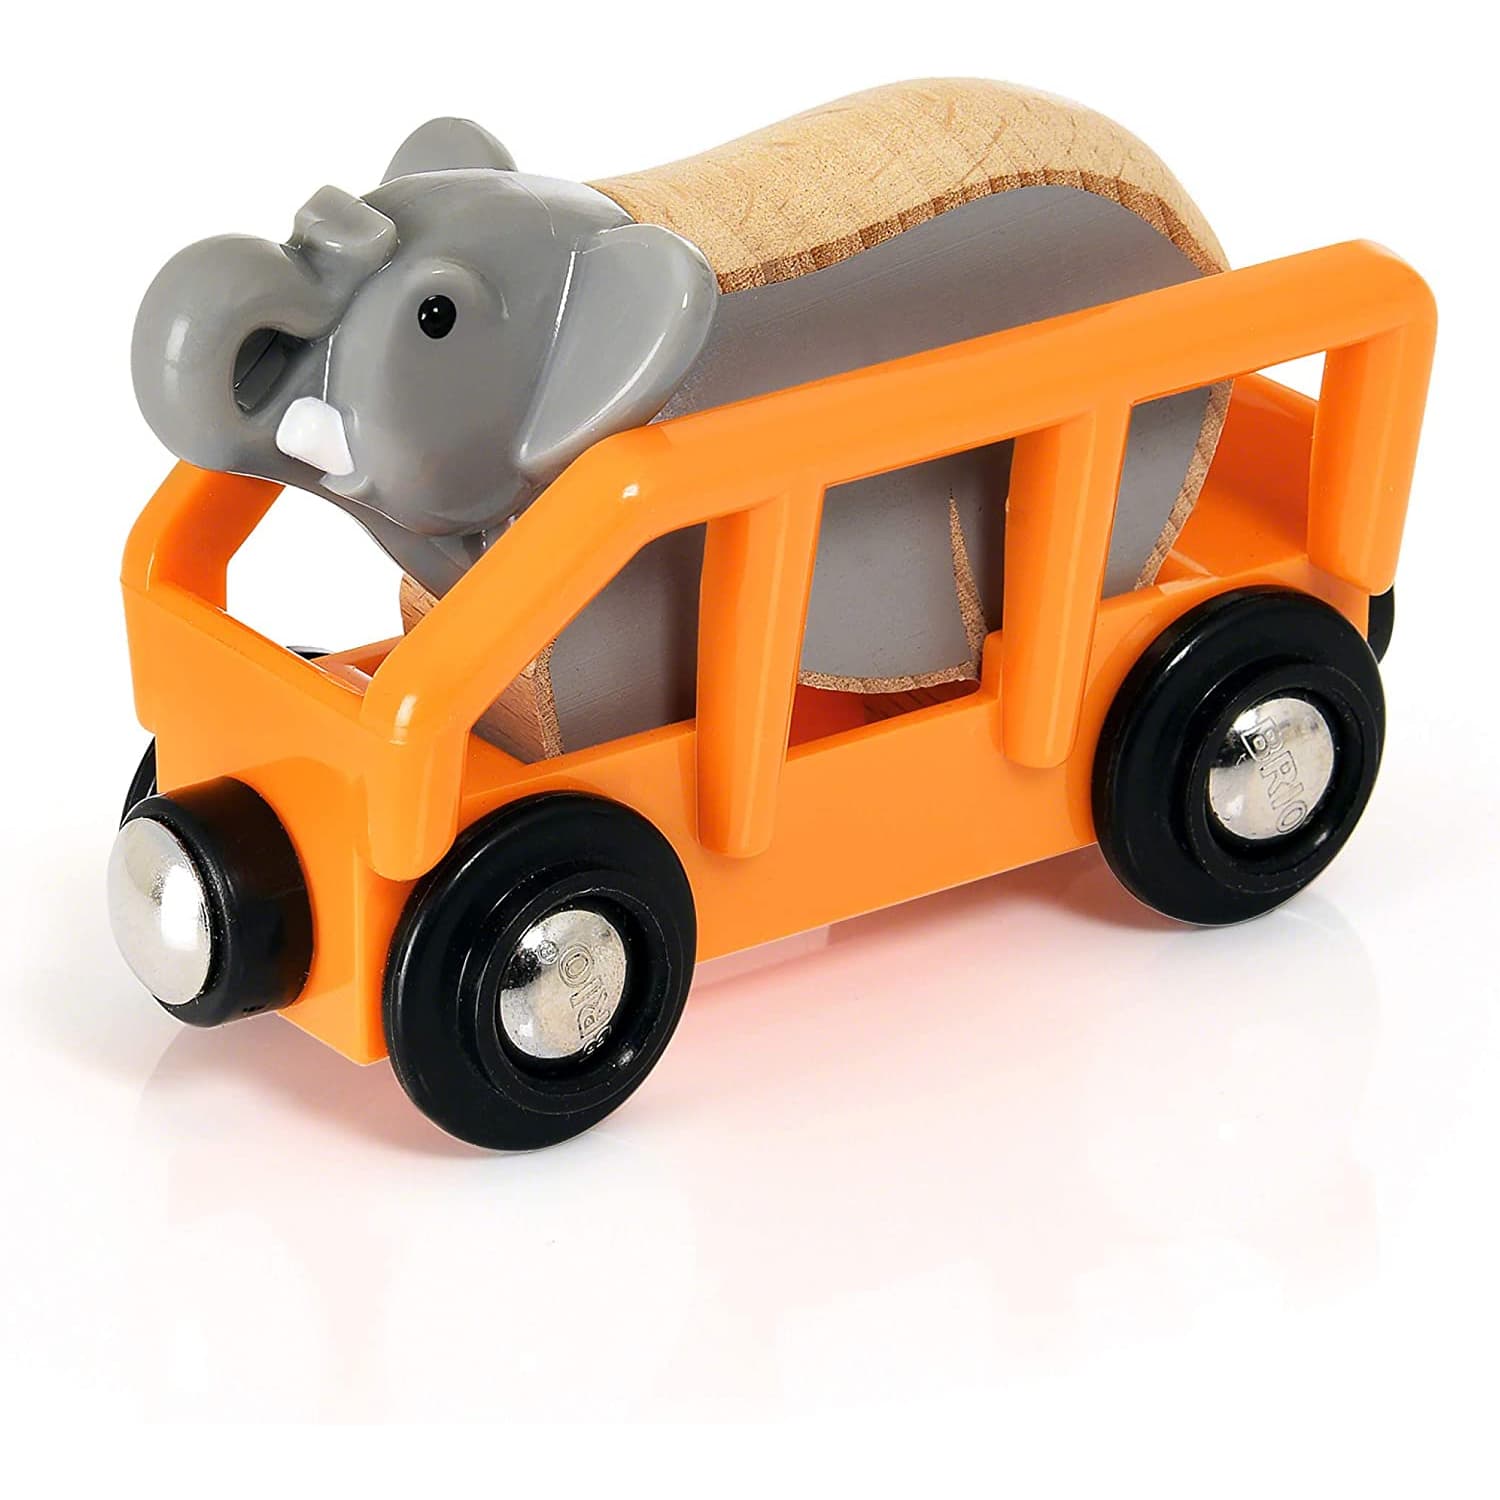 BRIO ブリオ WORLD サファリアドベンチャーセット 木製レール おもちゃ 正規輸入品